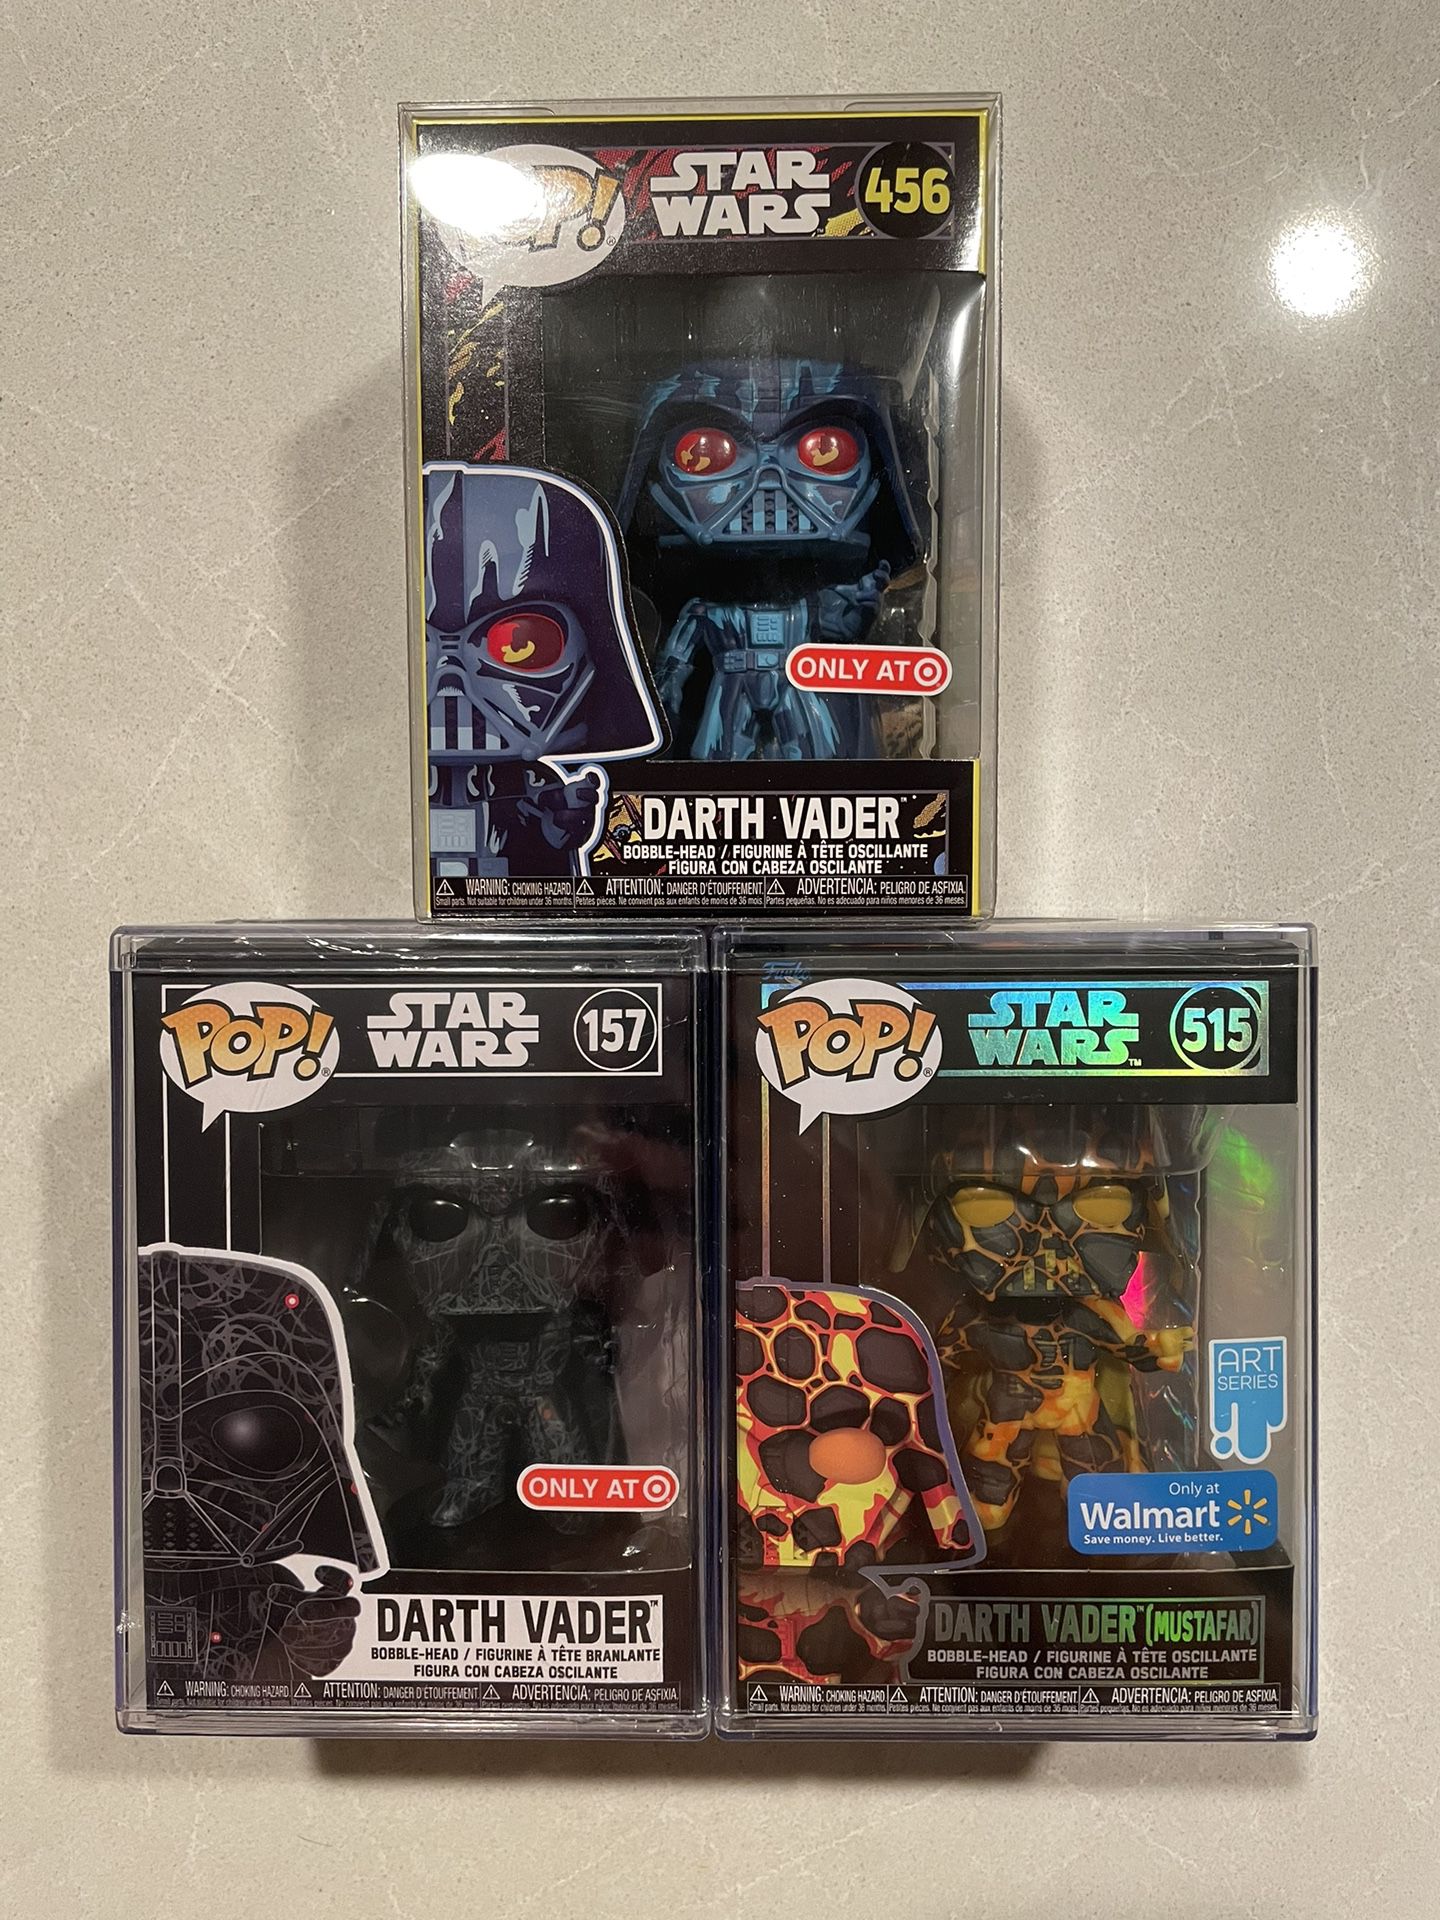 Darth Vader Funko Pop Set *MINT* Target Walmart Exclusive Star Wars 456 with protector 157 Anakin 515